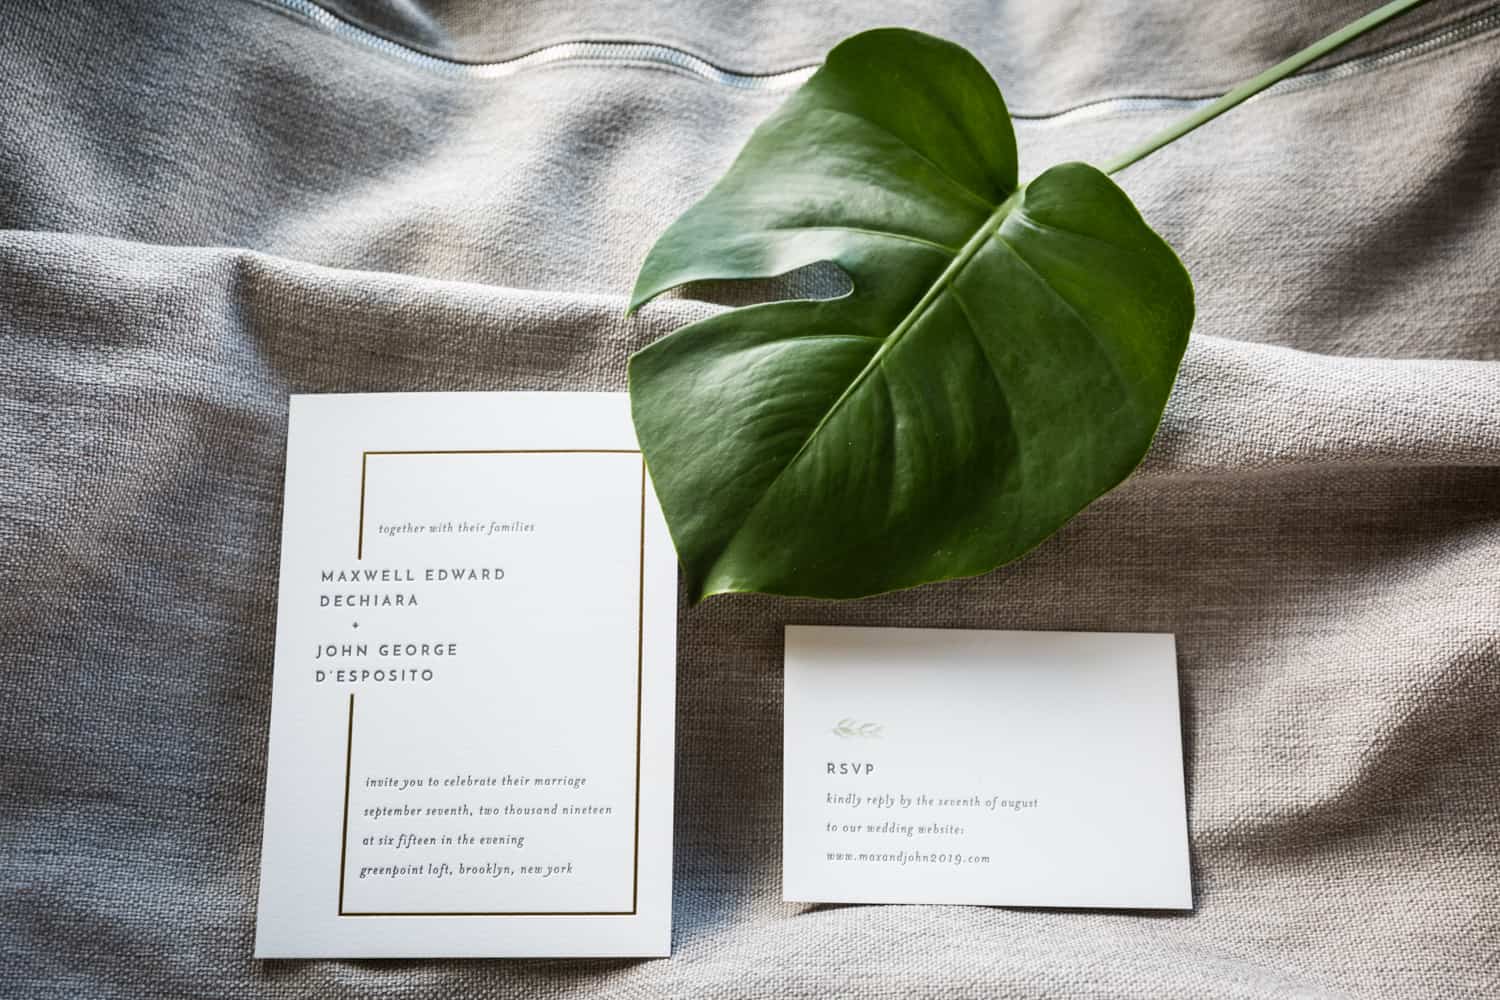 Wedding invitation and green leaf on grey pillow